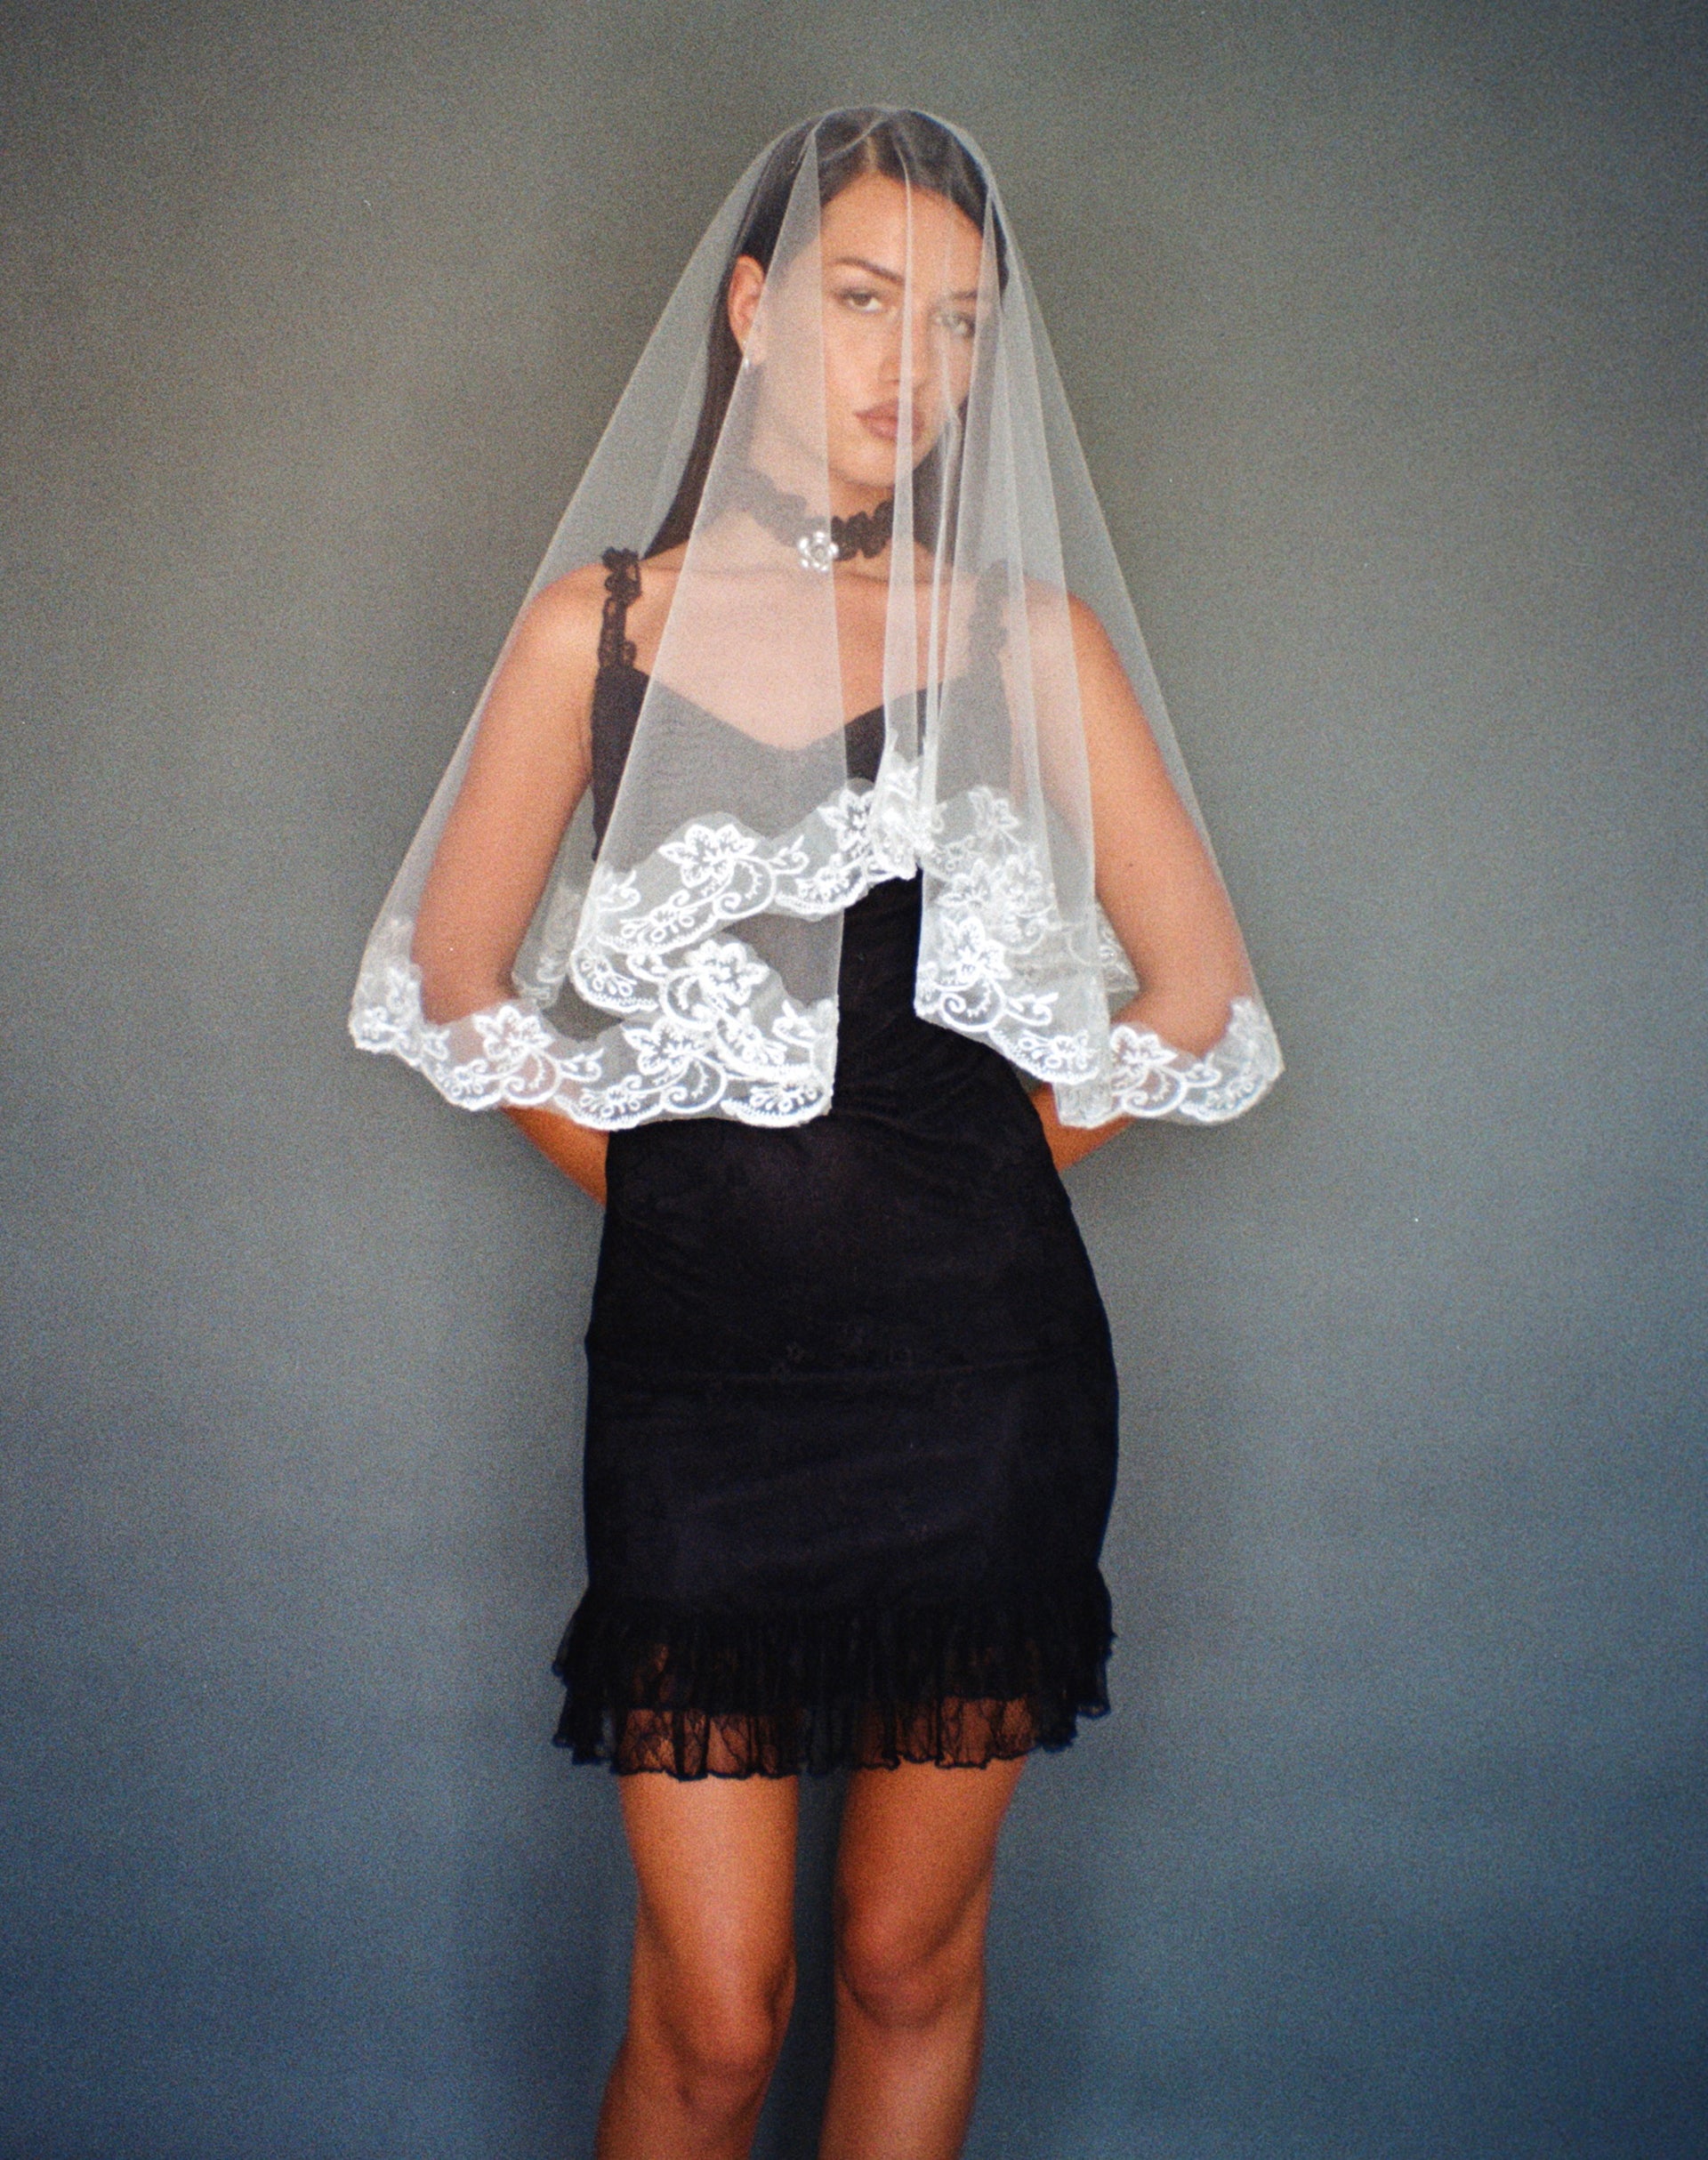 Image of Elaine Lace Mini Dress in Black